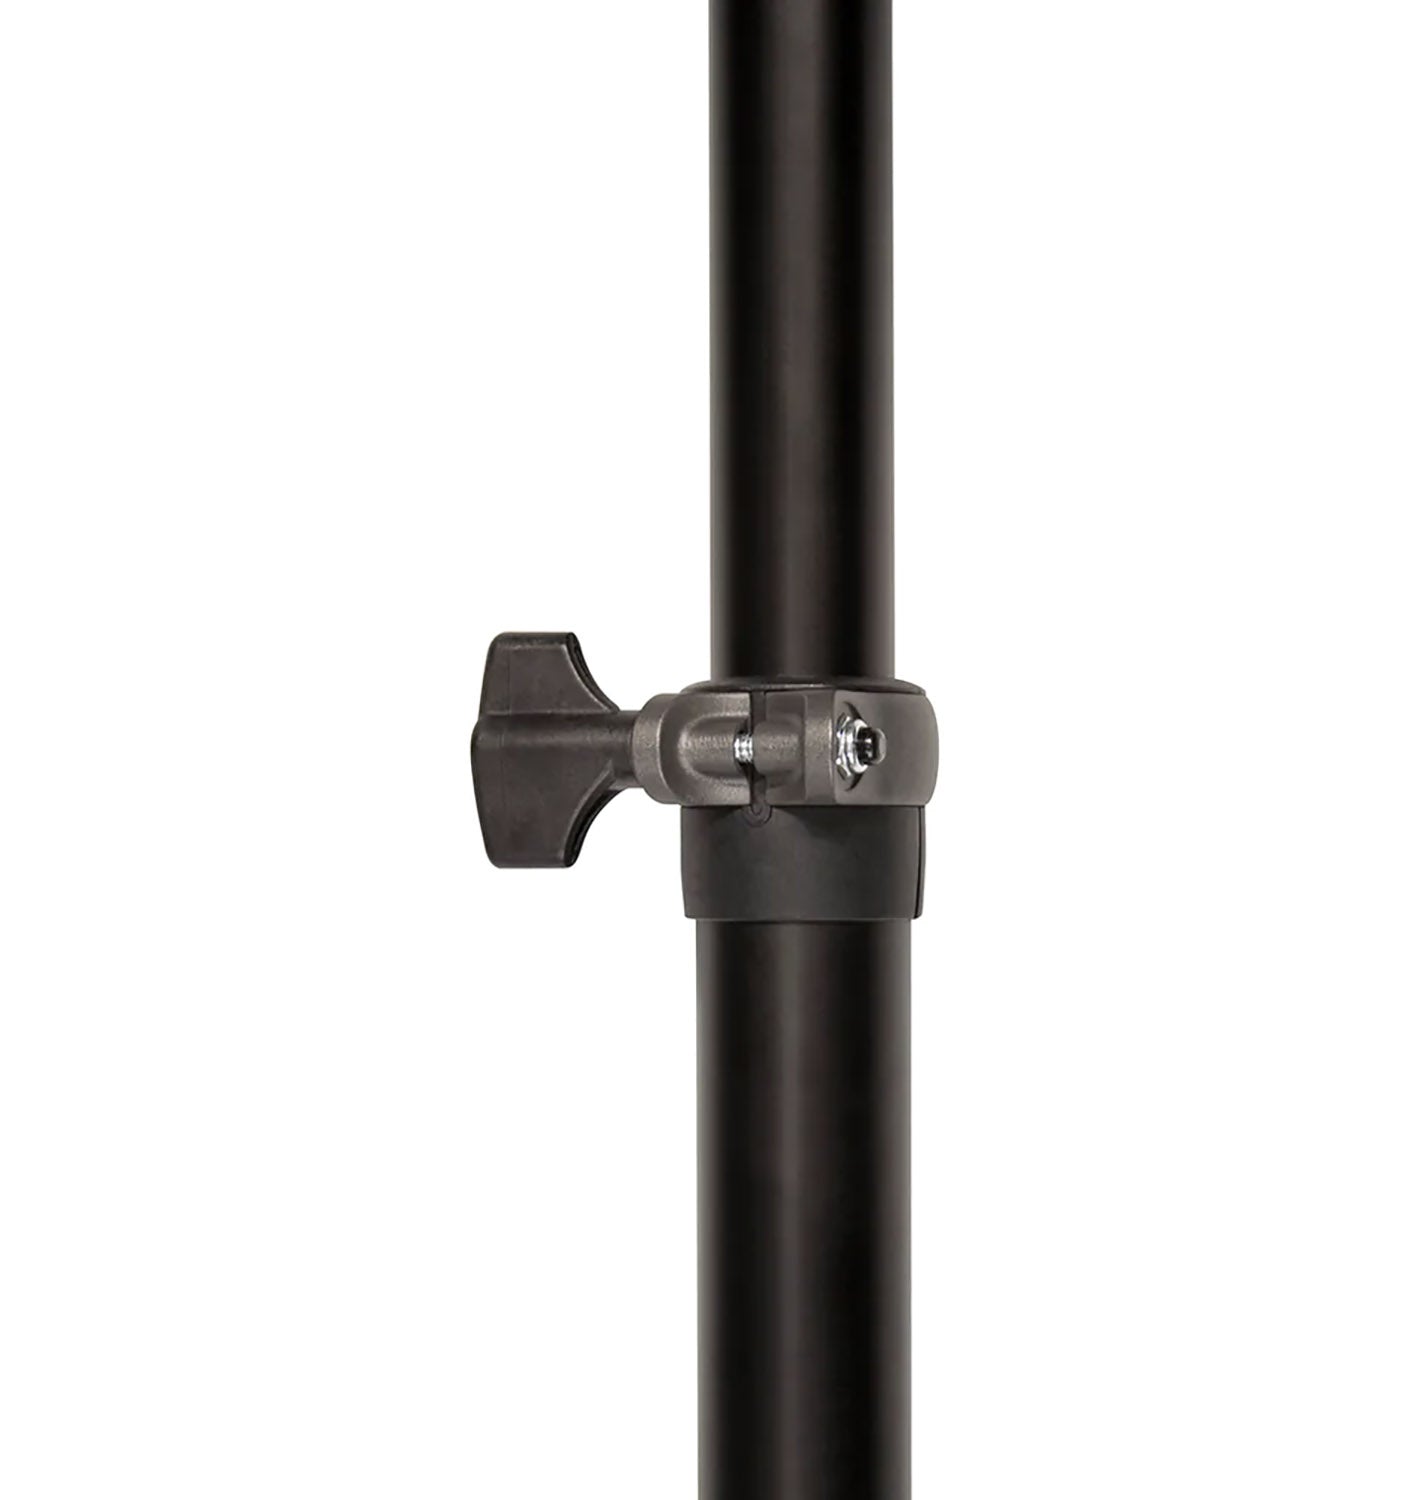 B-Stock: Ultimate Support SP-80B Adjustable Speaker Pole - Hollywood DJ